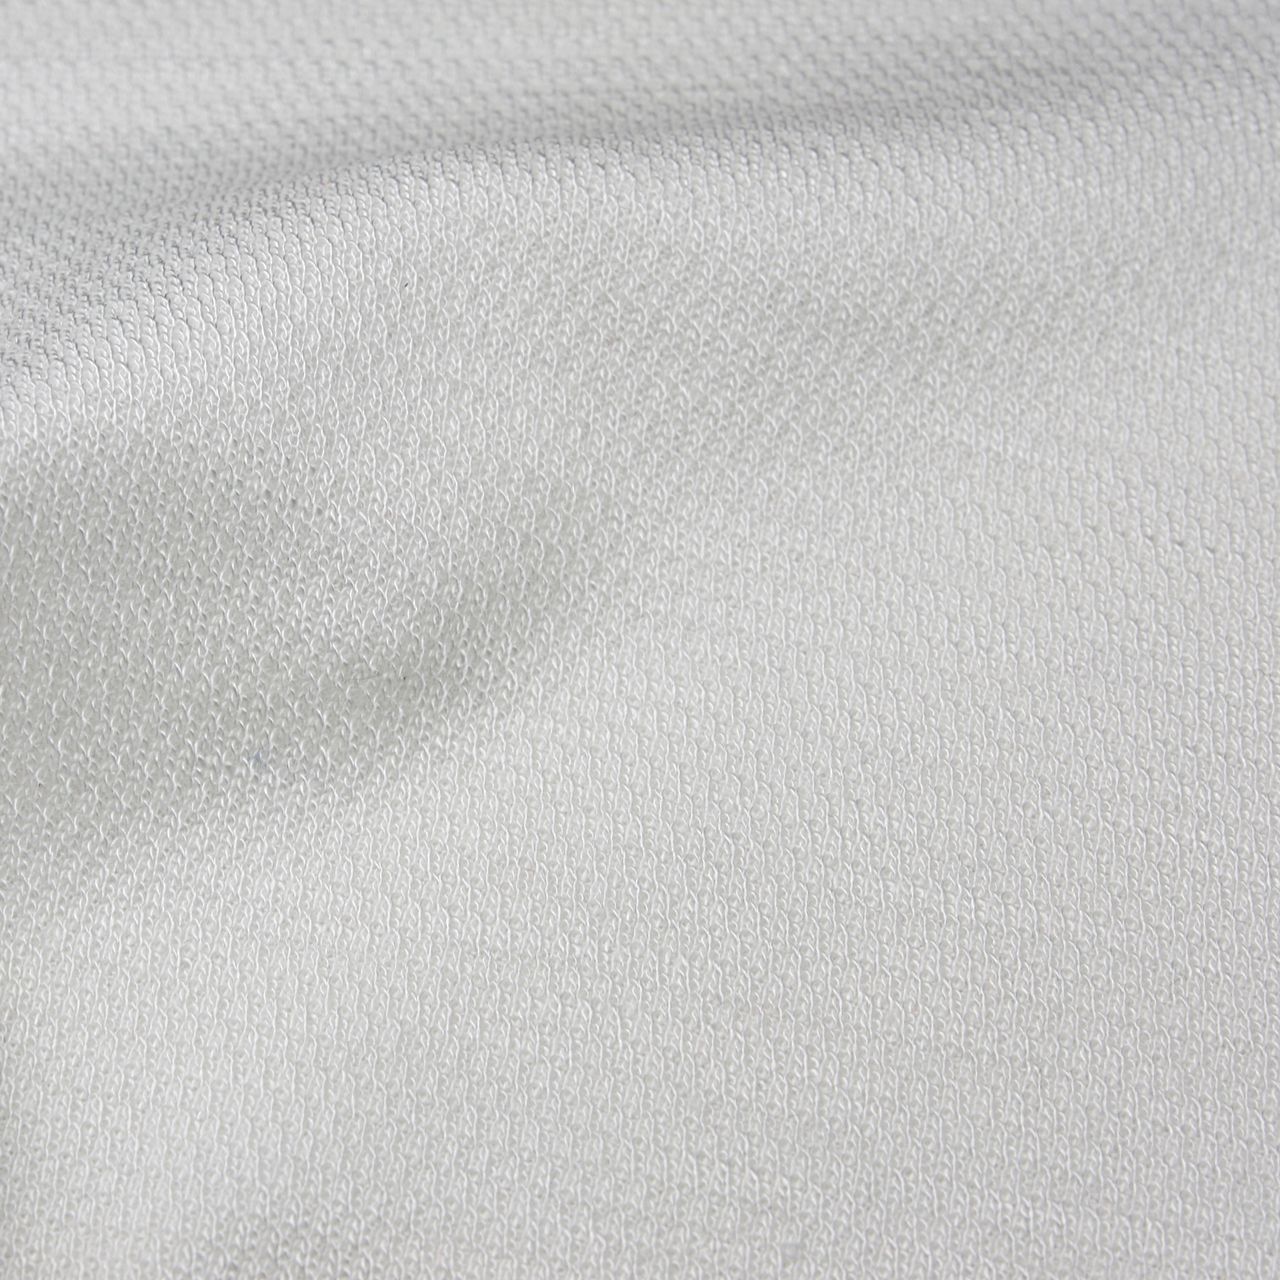 Nomex Single Jersey Knit Fabric | HAI HUEI INTERNATIONAL CORP.